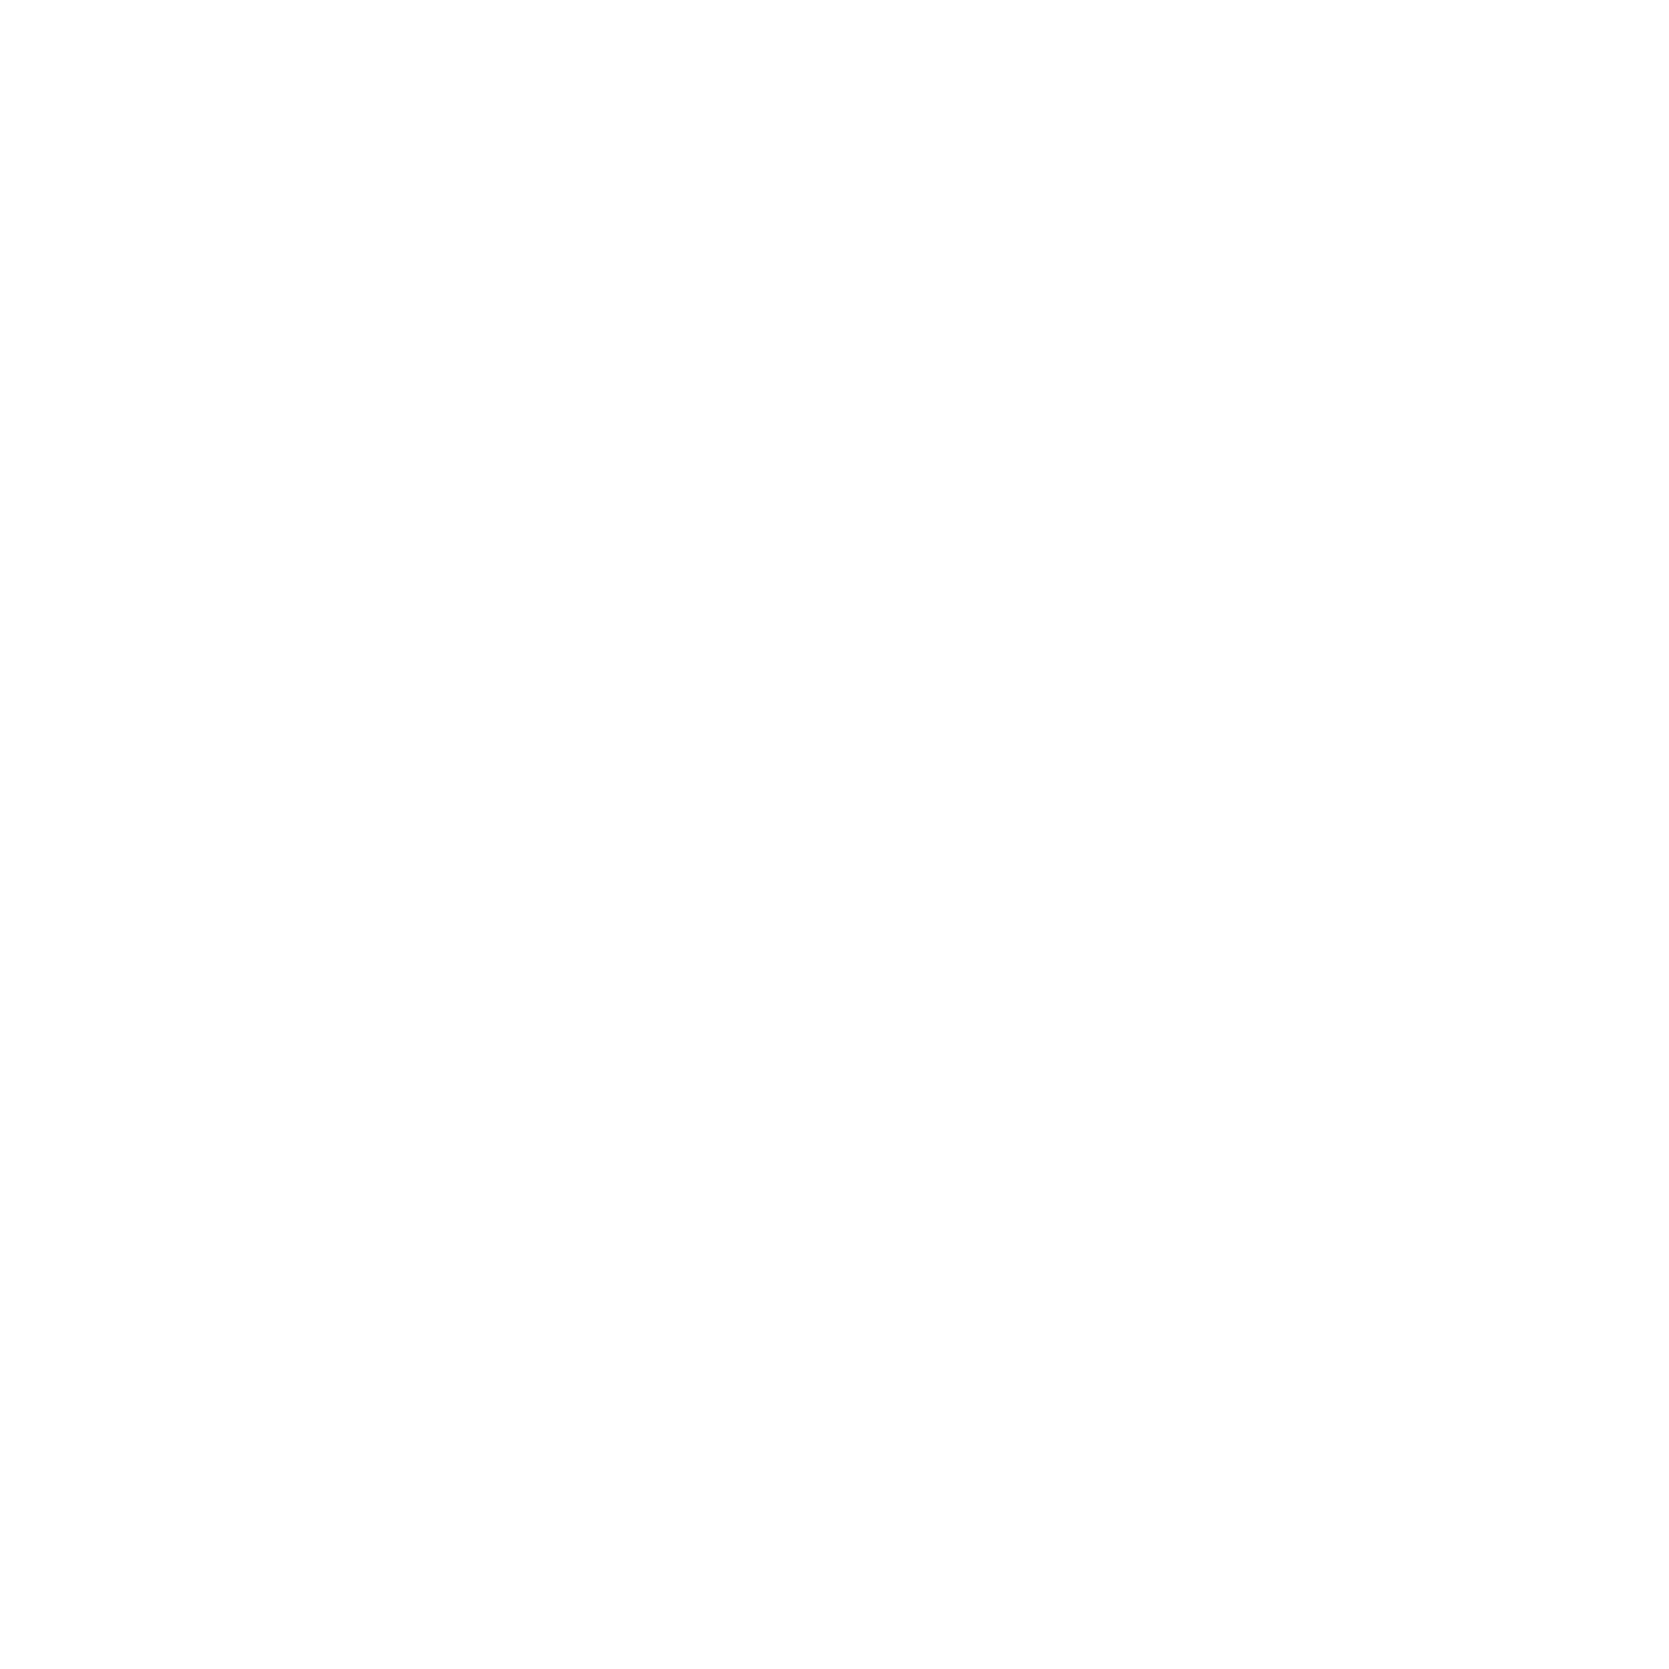 40.8K engagements